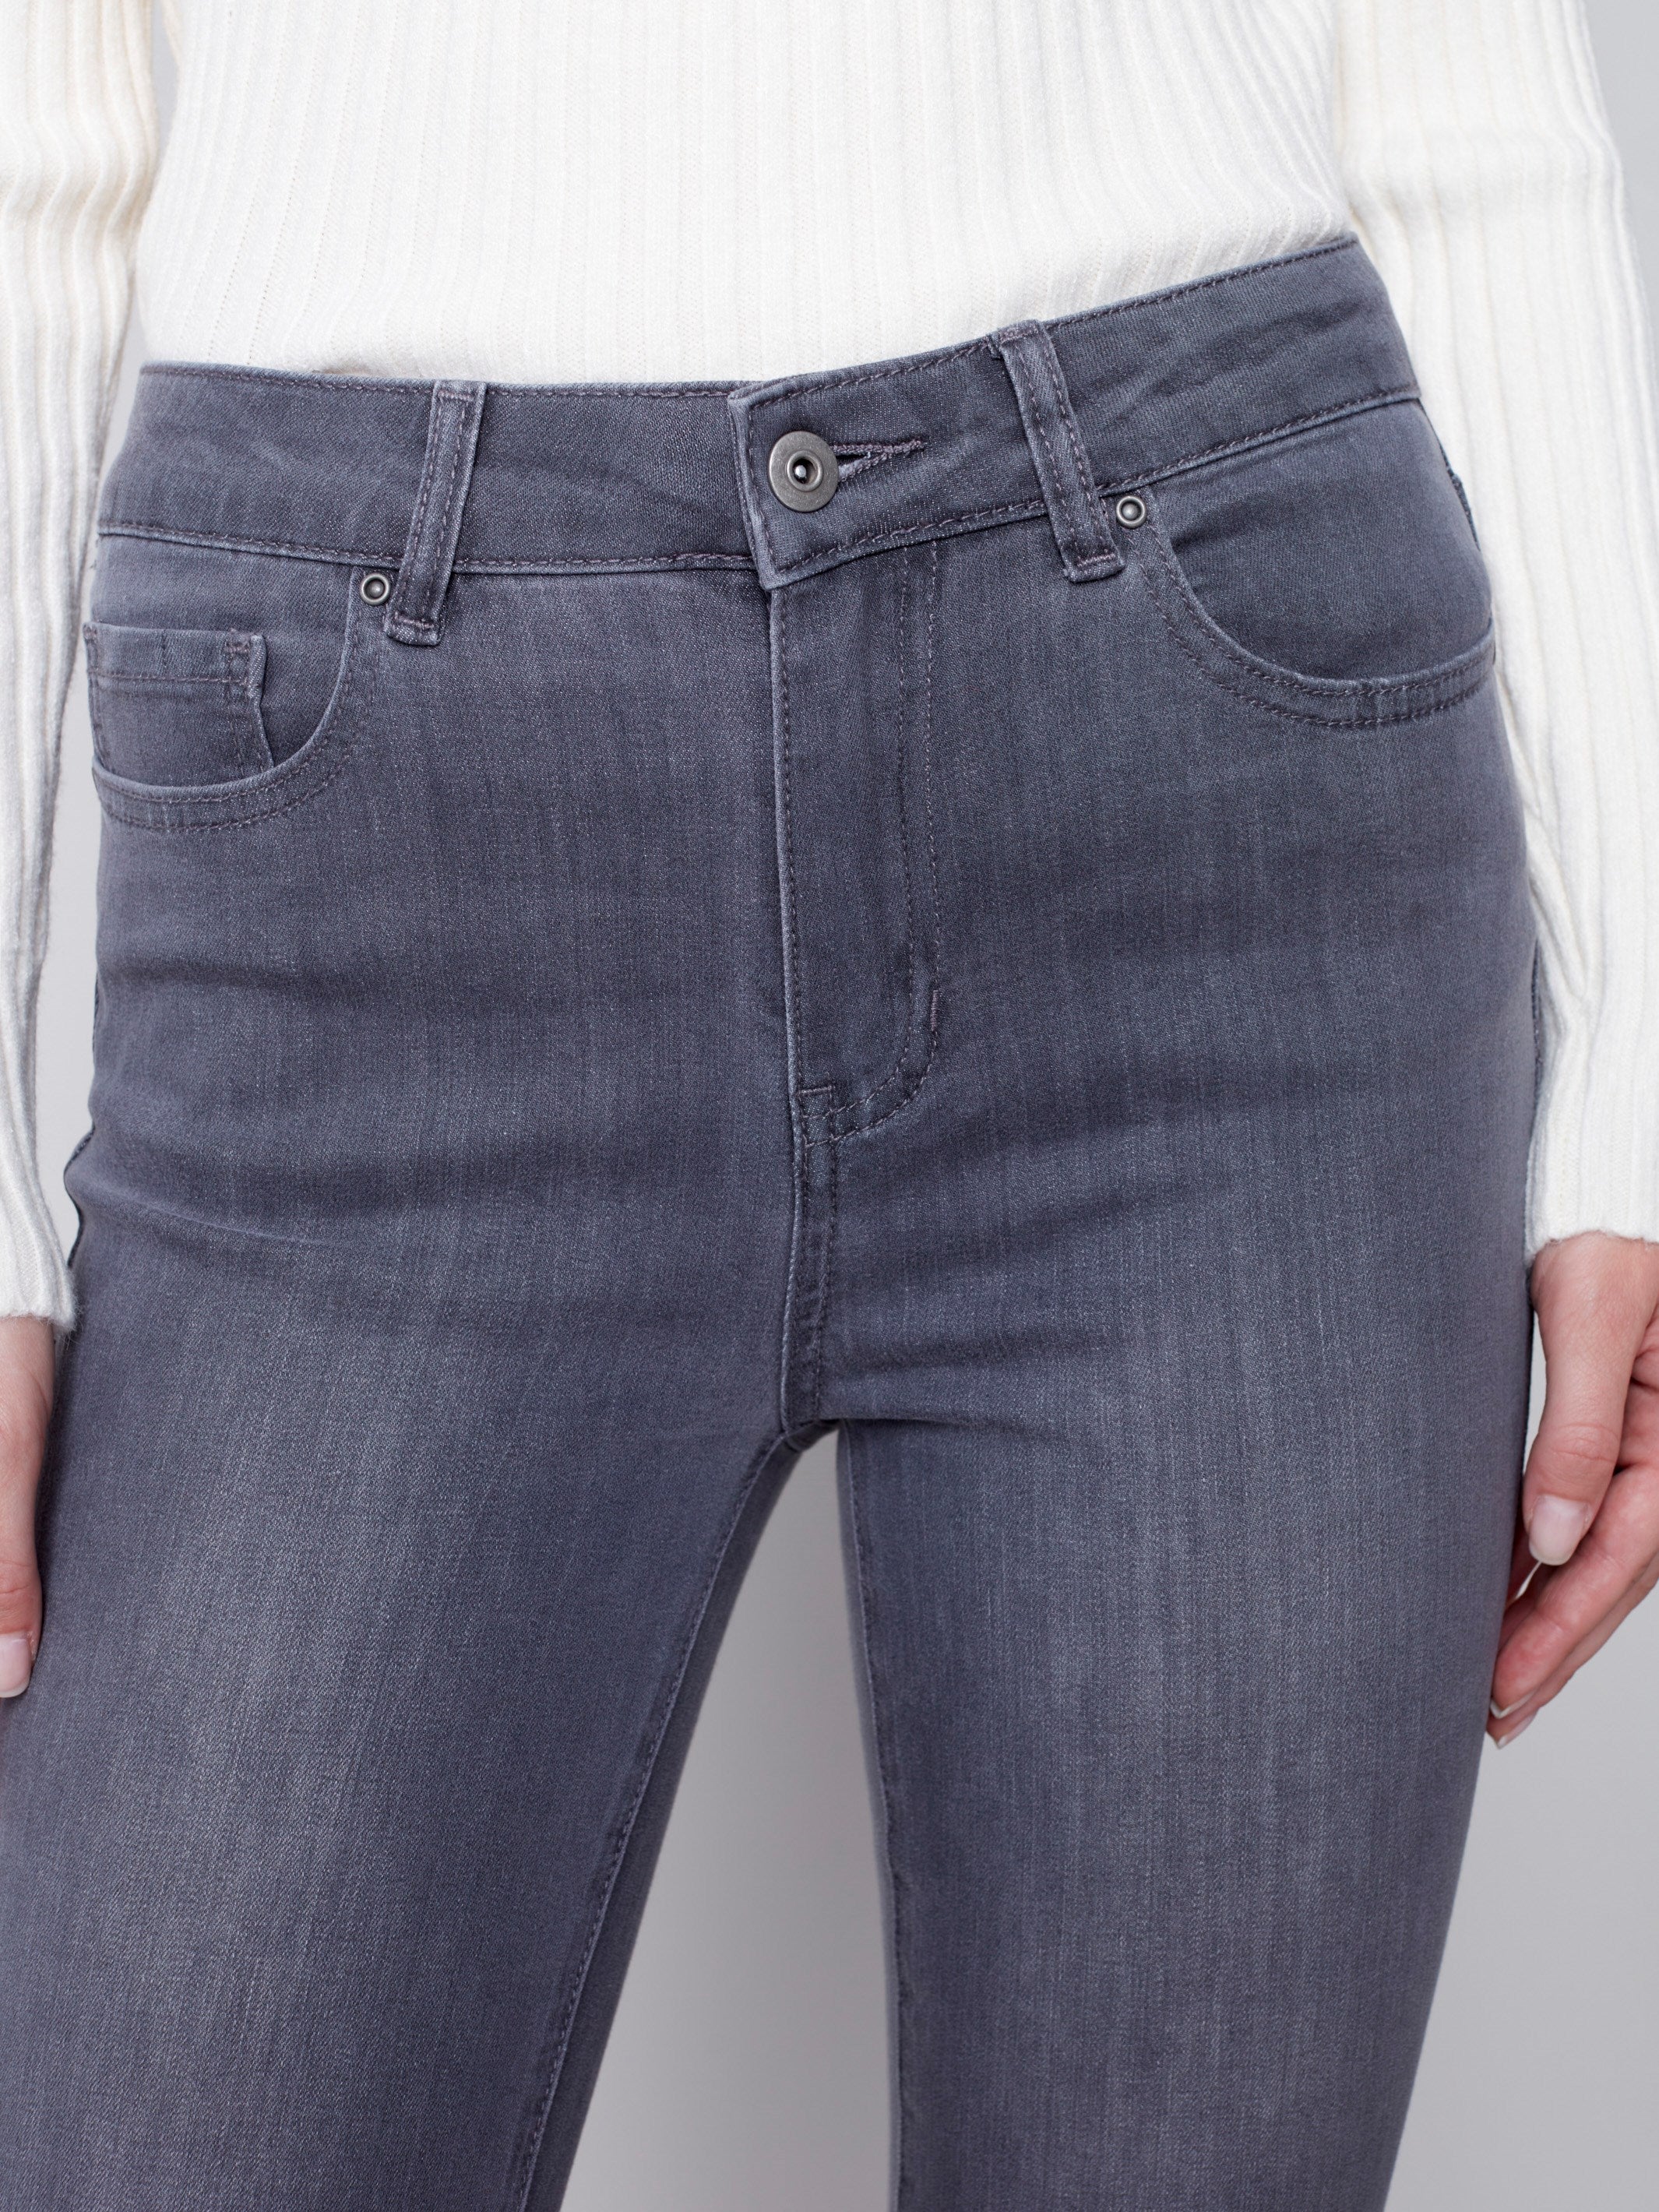 Bootcut Jeans with Asymmetrical Fringed Hem - Medium Grey